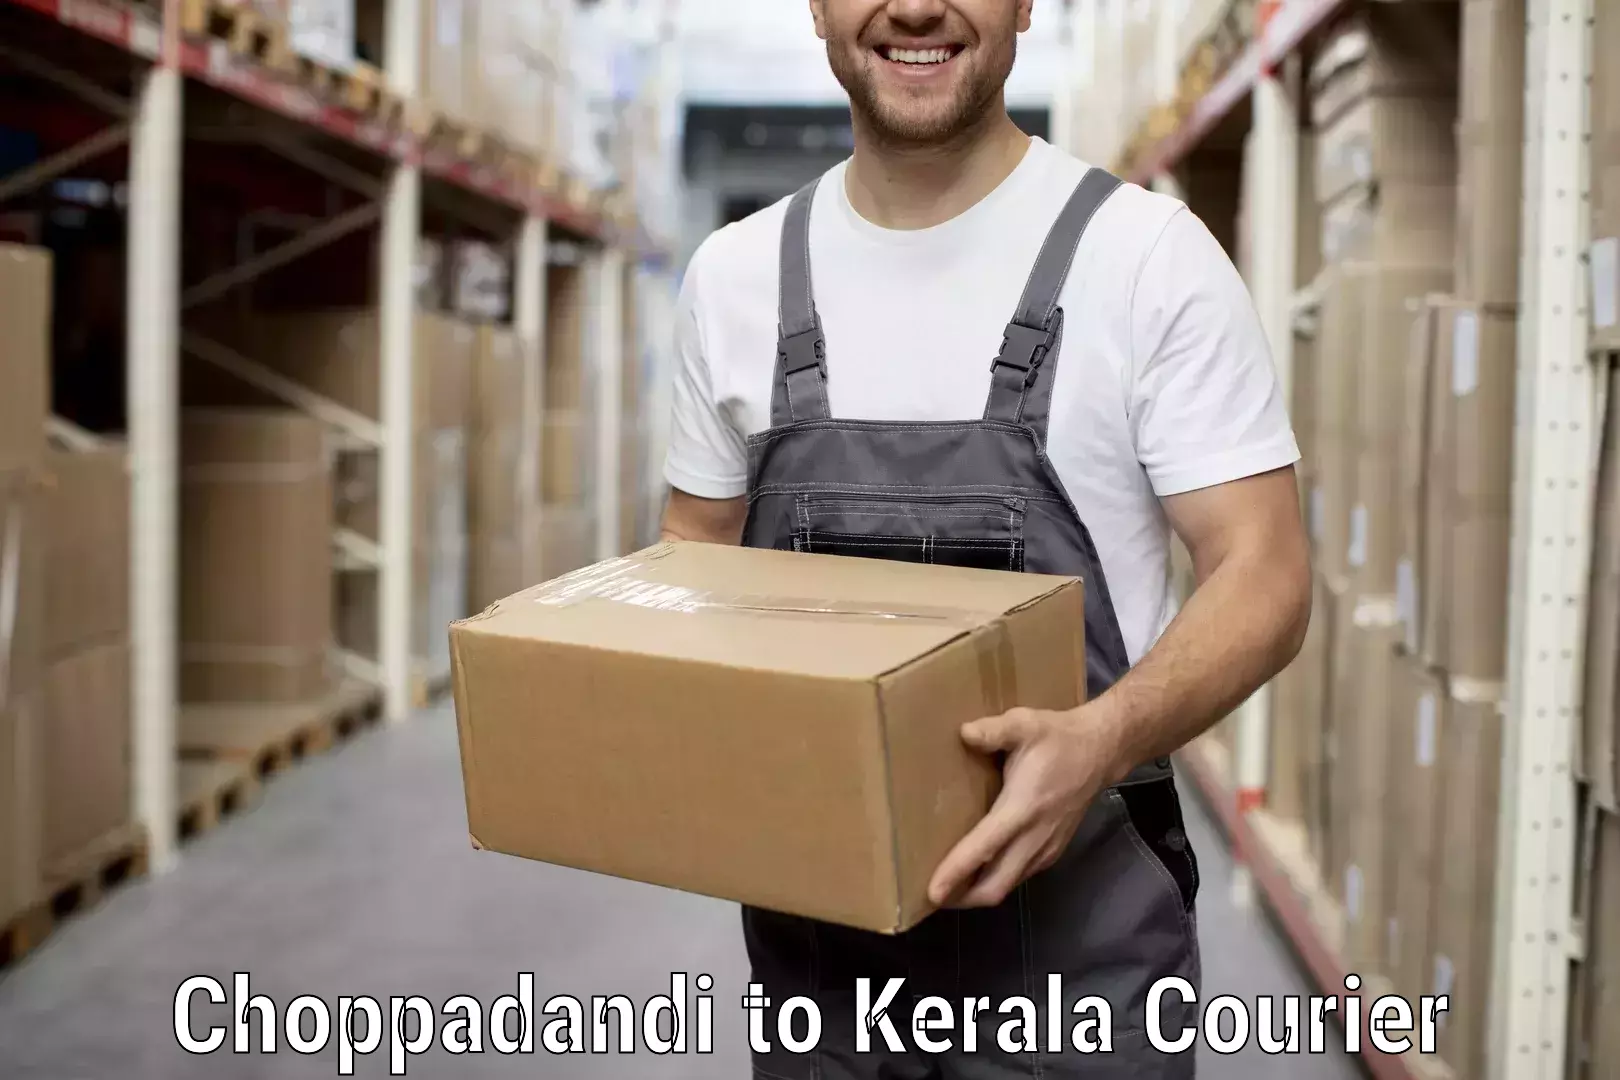 Furniture relocation experts Choppadandi to Kerala